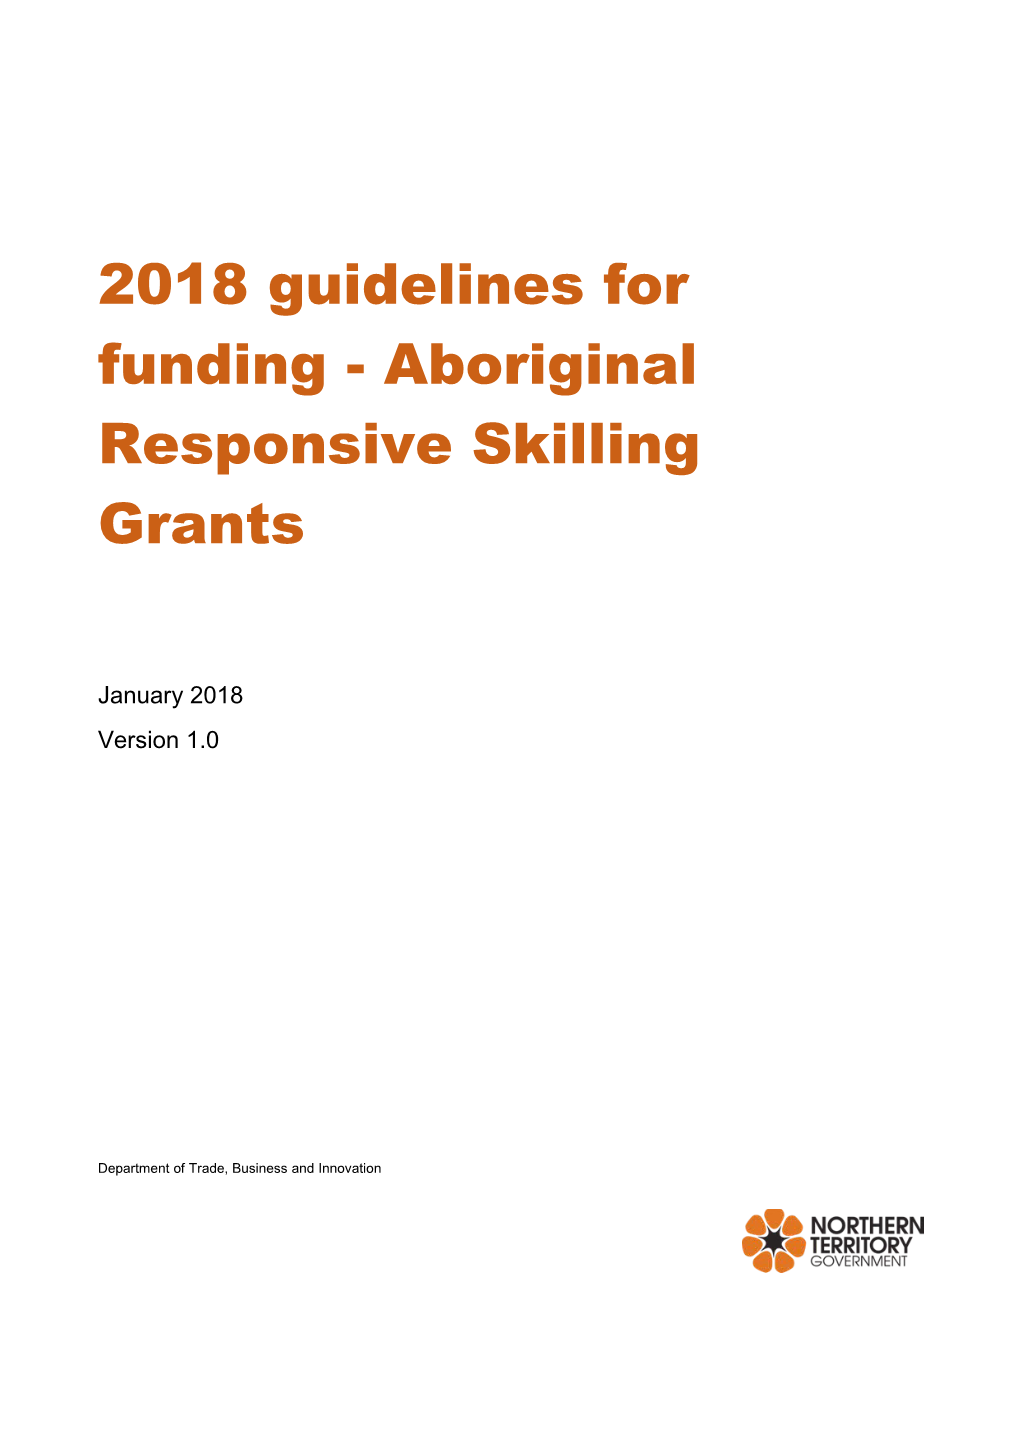 2018 Guidelines for Funding - Aboriginal Responsive Skilling Grants